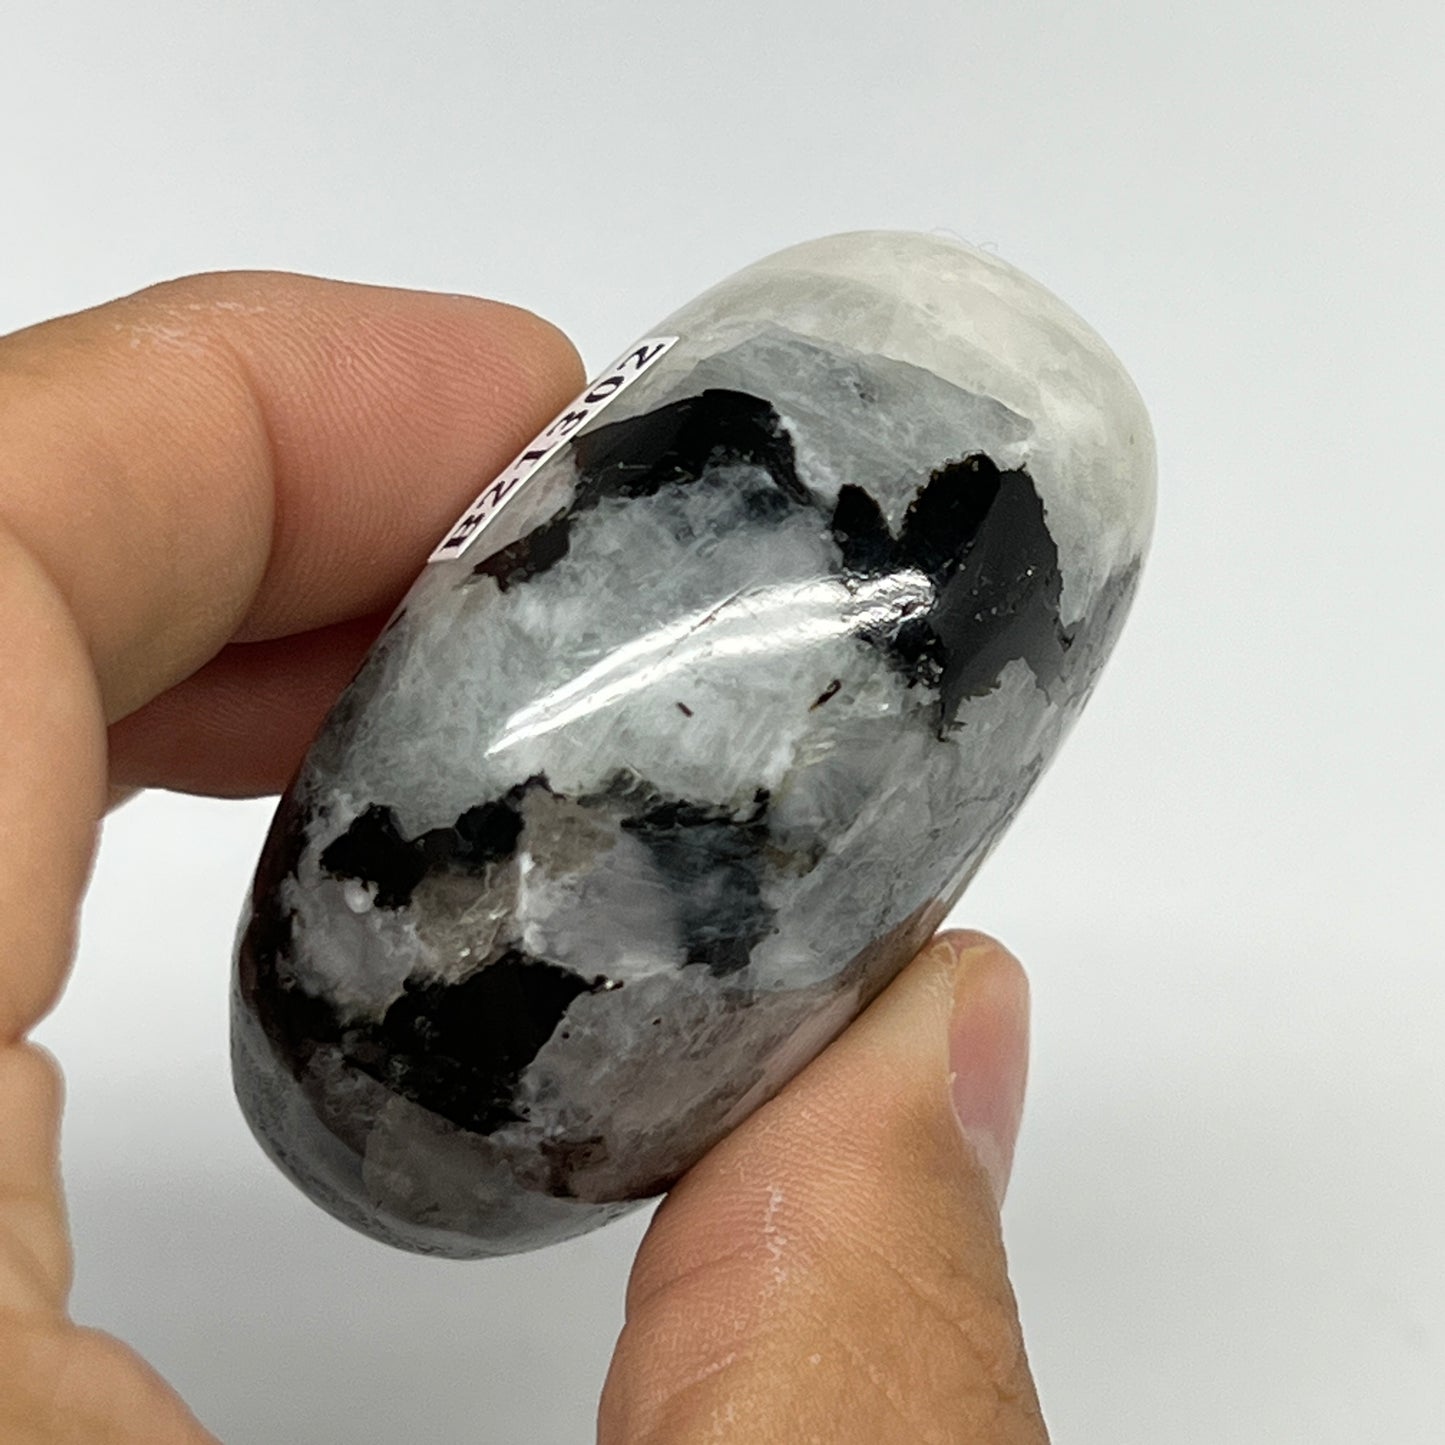 110.9g,2.1"x1.7"x1.1", Rainbow Moonstone Palm-Stone Polished from India, B21302